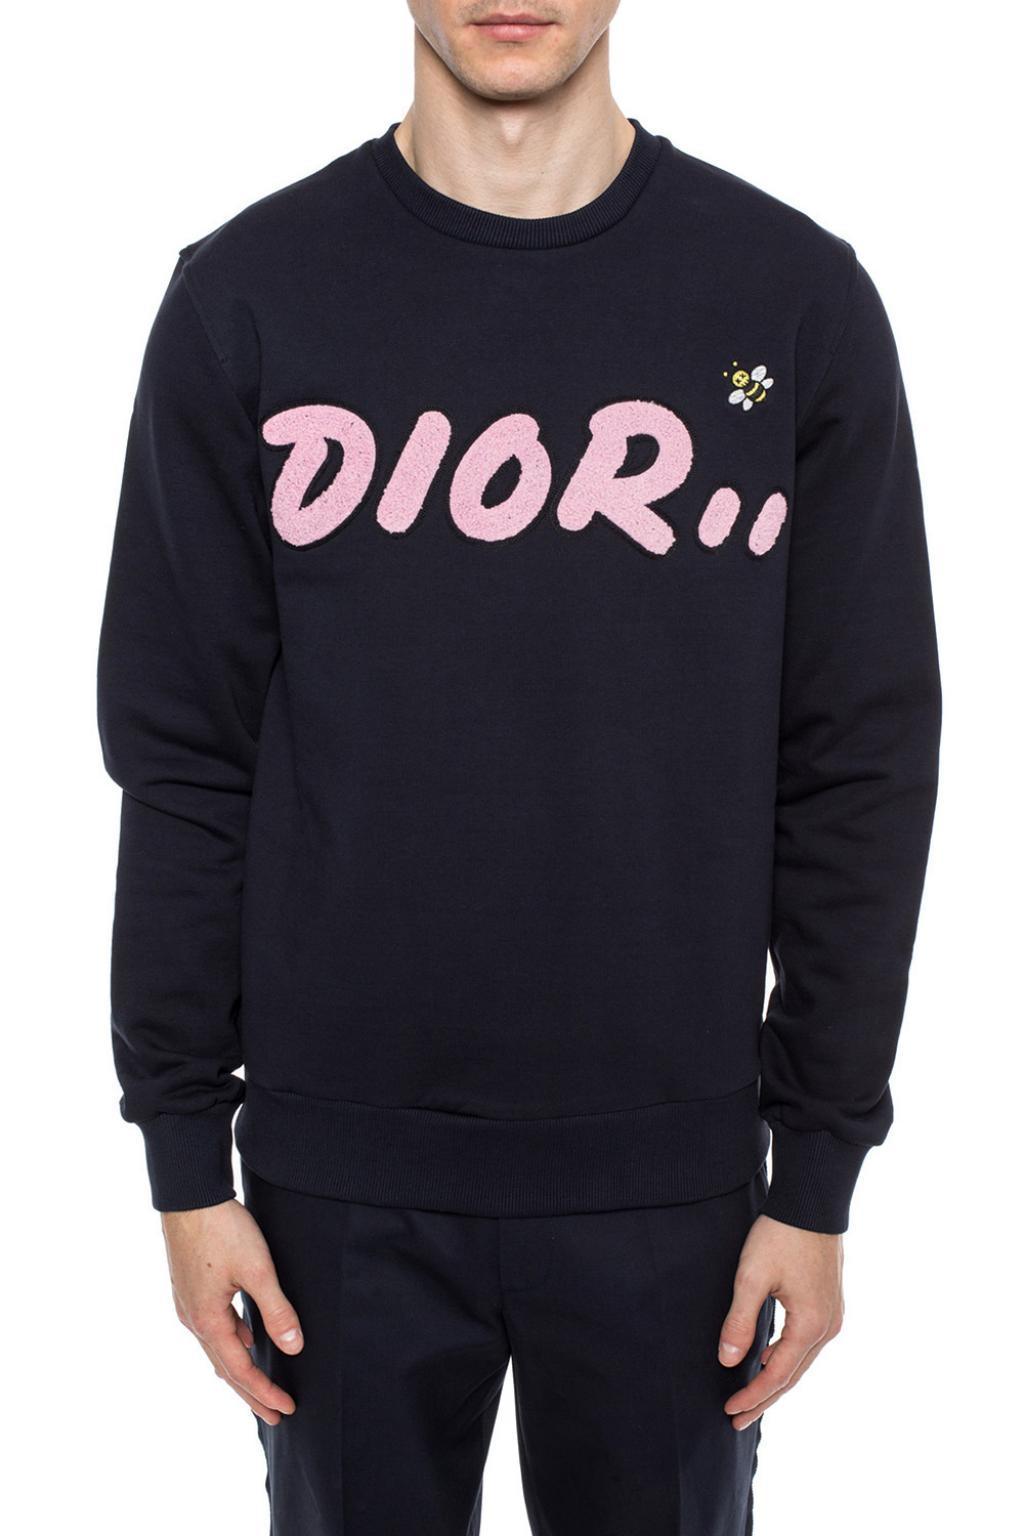 Dior X Kaws Logo Black Pink Sweatshirt | vlr.eng.br